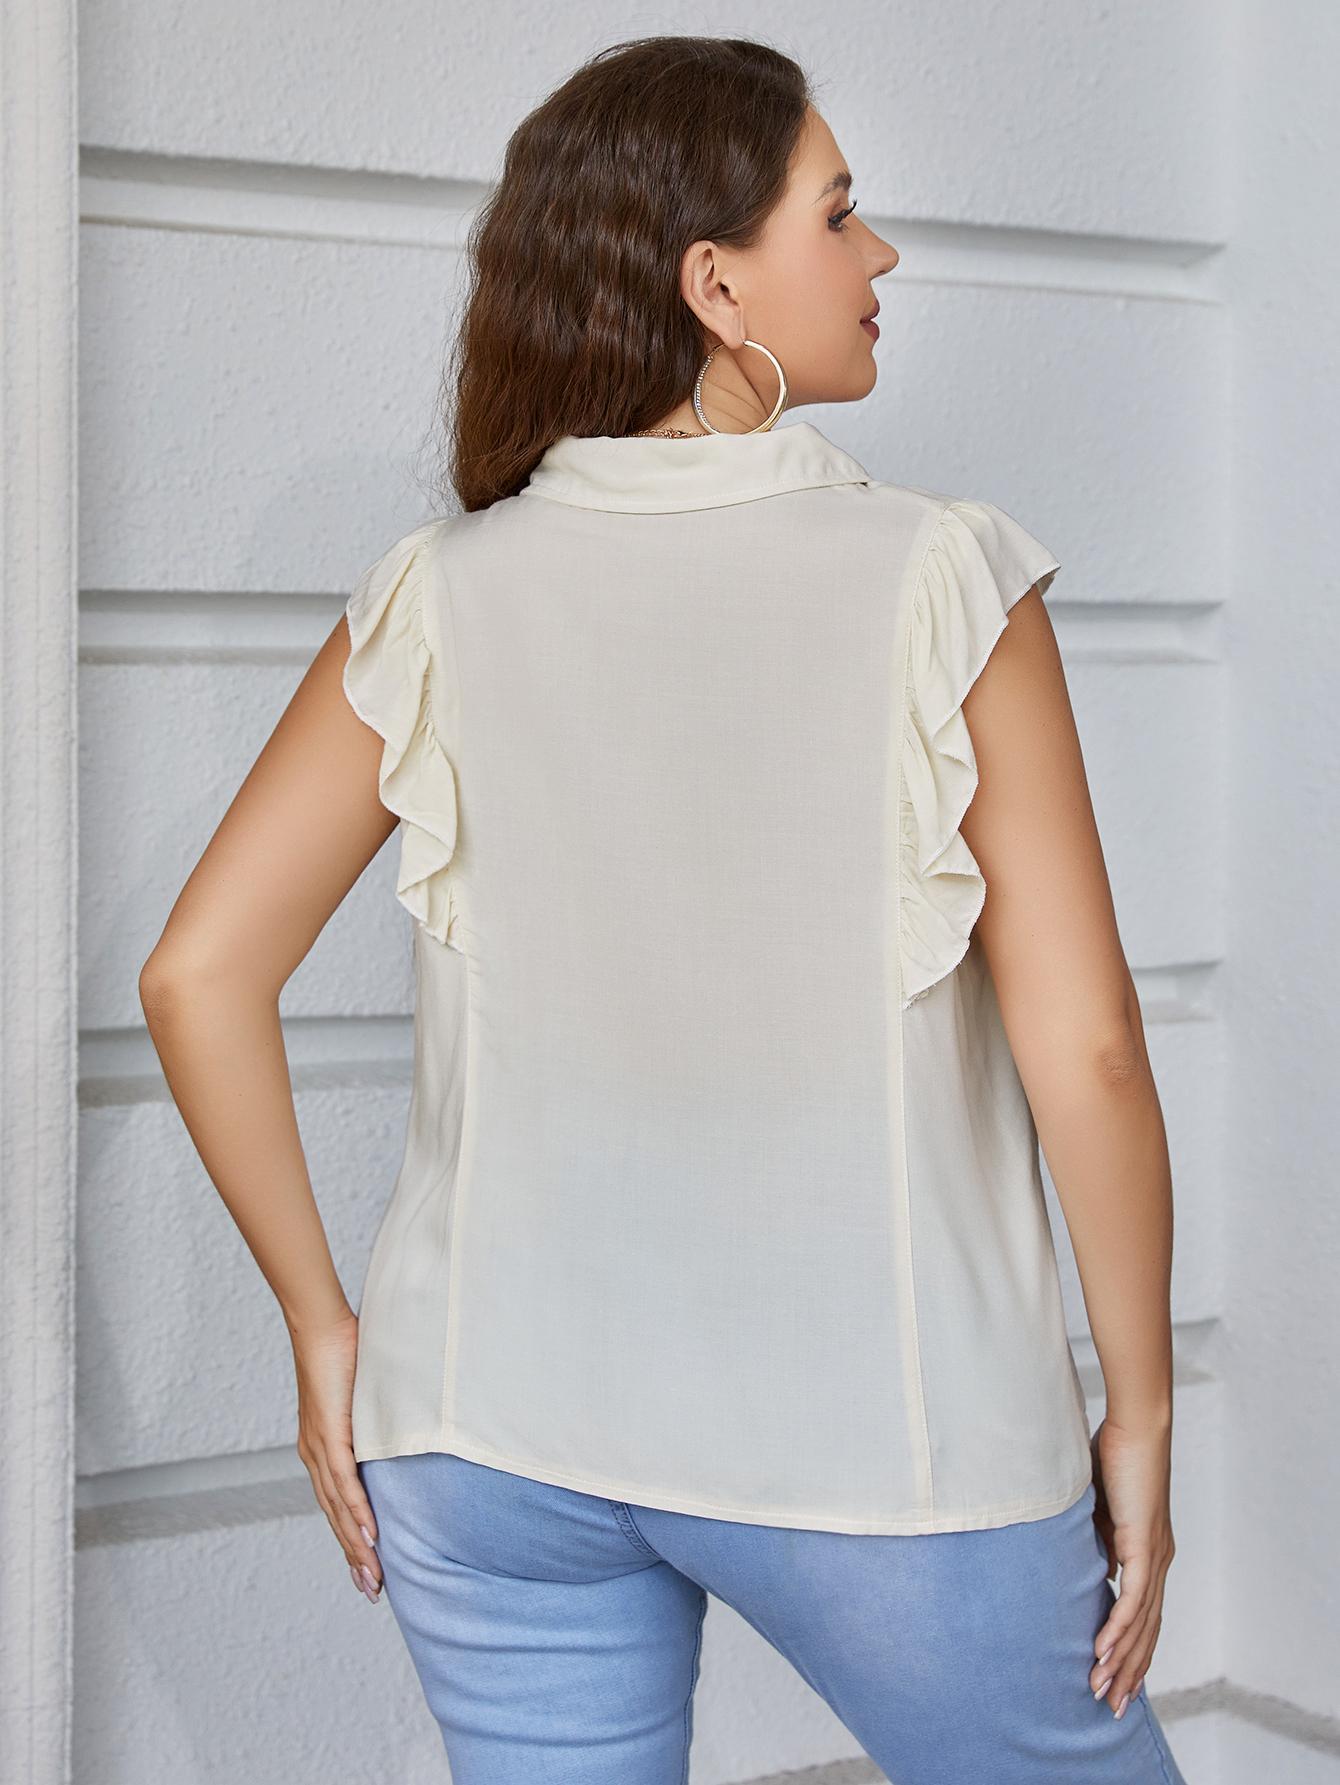 Gray Unlock Elegance Plus Size Ruffled Cap Sleeve Shirt Plus Size Tops